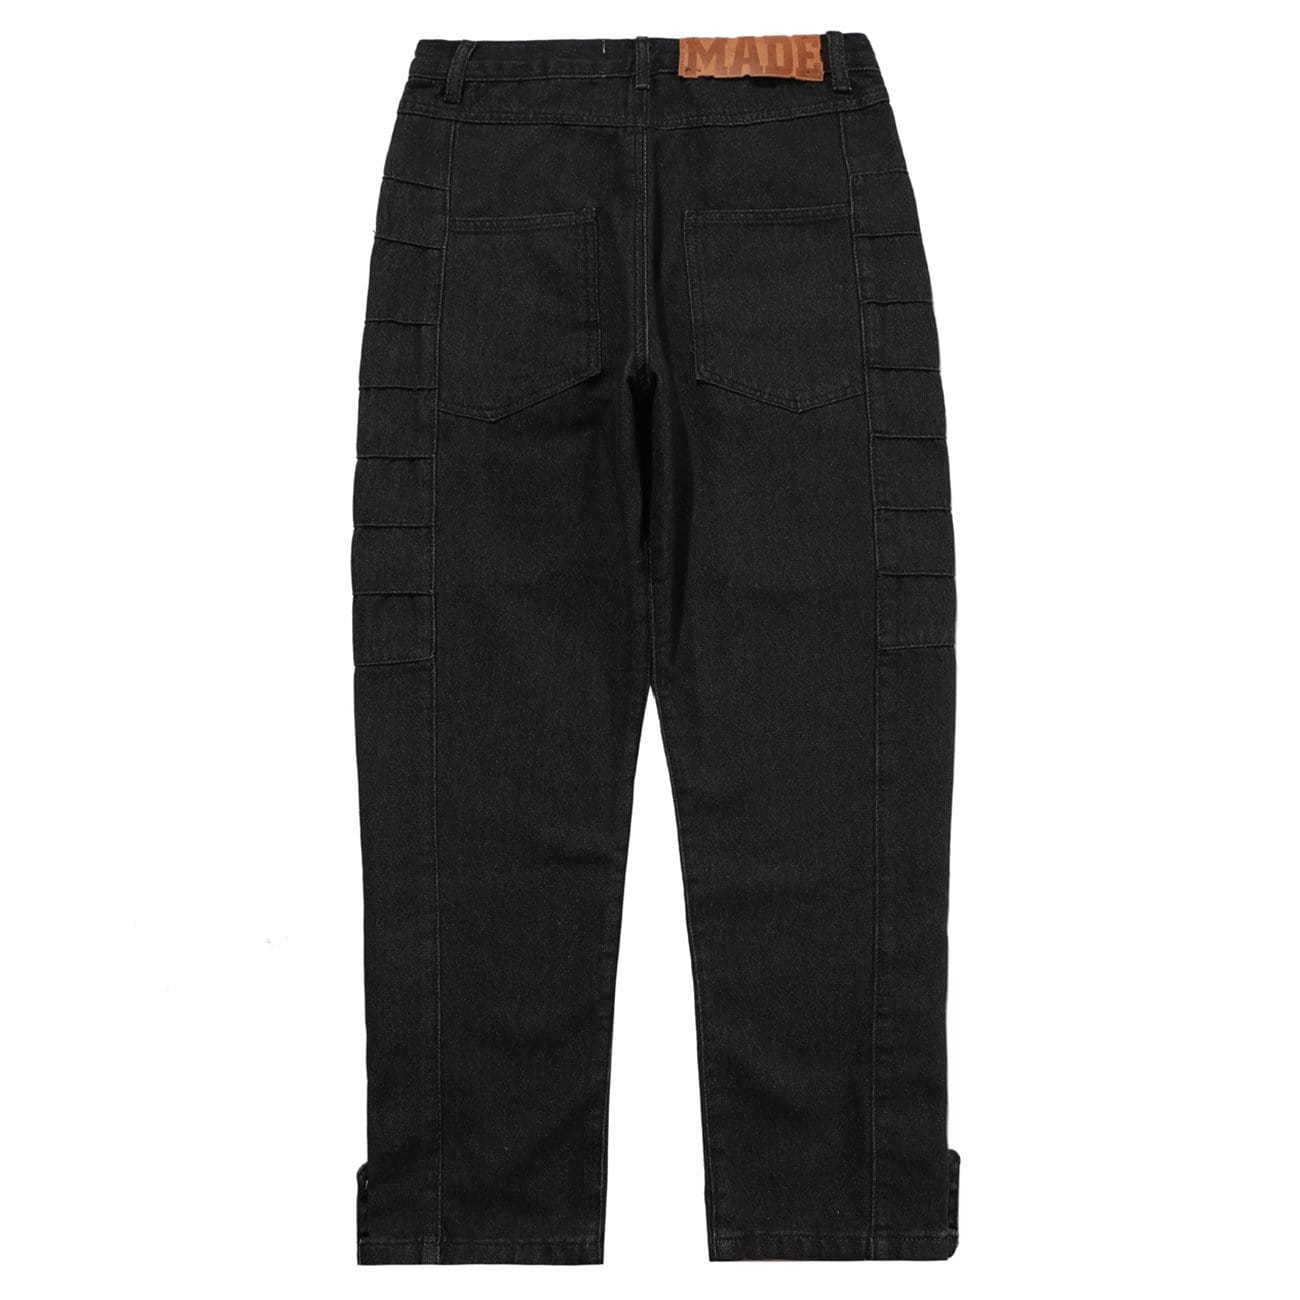 WLS Functional Zipper Pockets Jeans